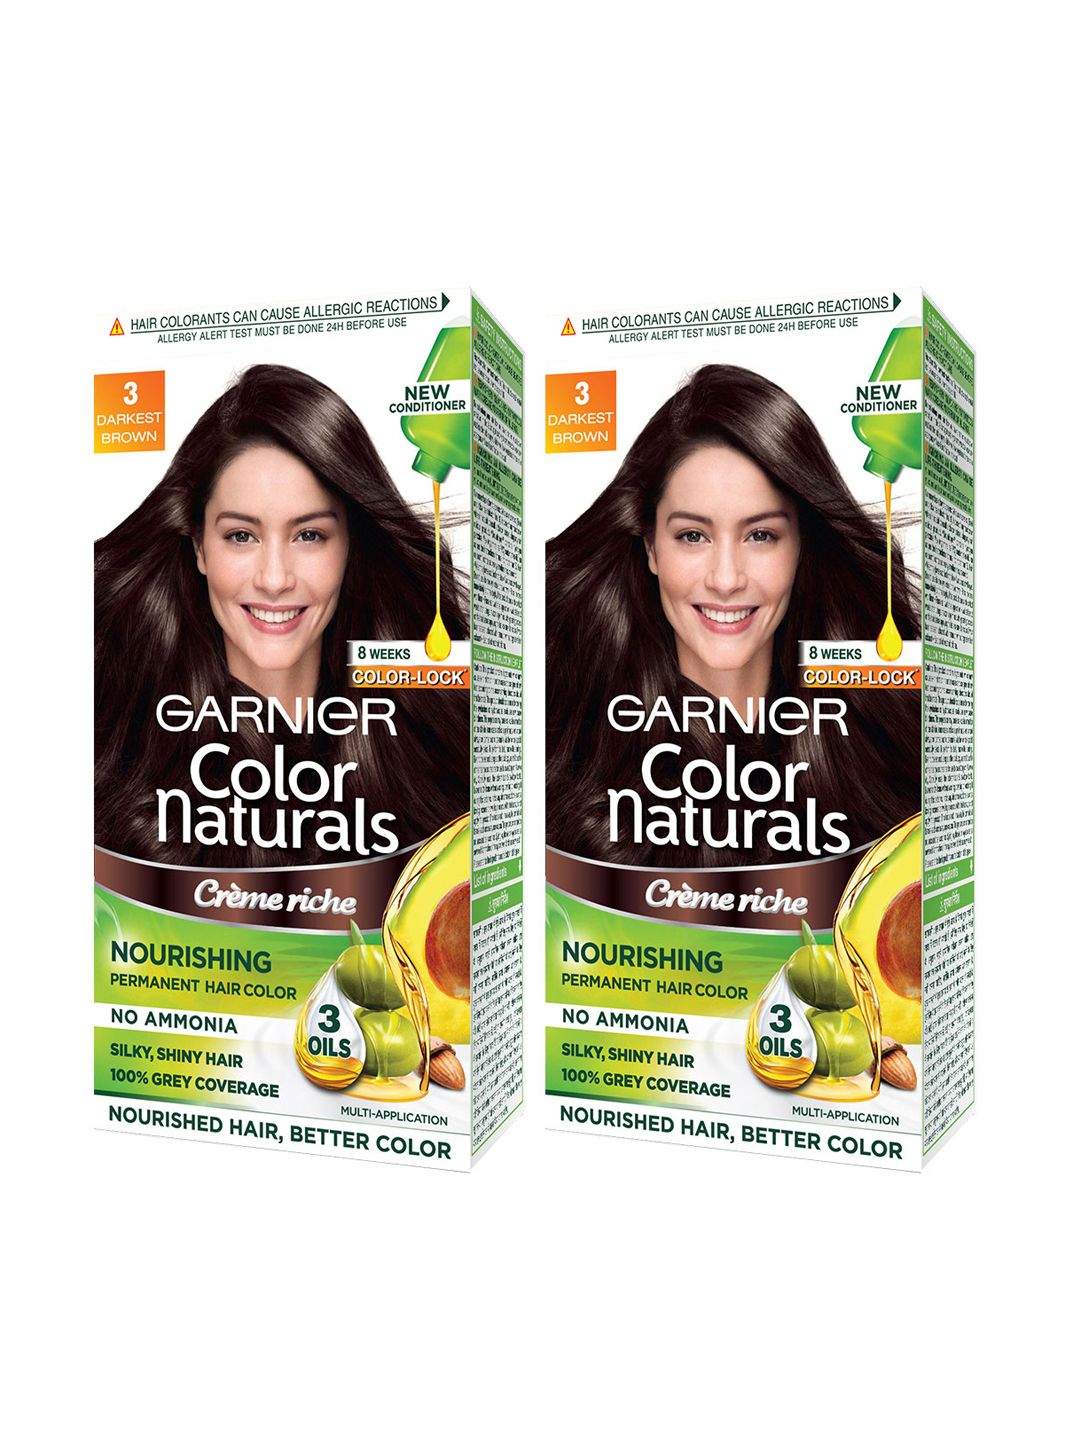 Garnier Set of 2 Color Naturals Creme Hair Color 130 ml each - Darkest Brown 3 Price in India